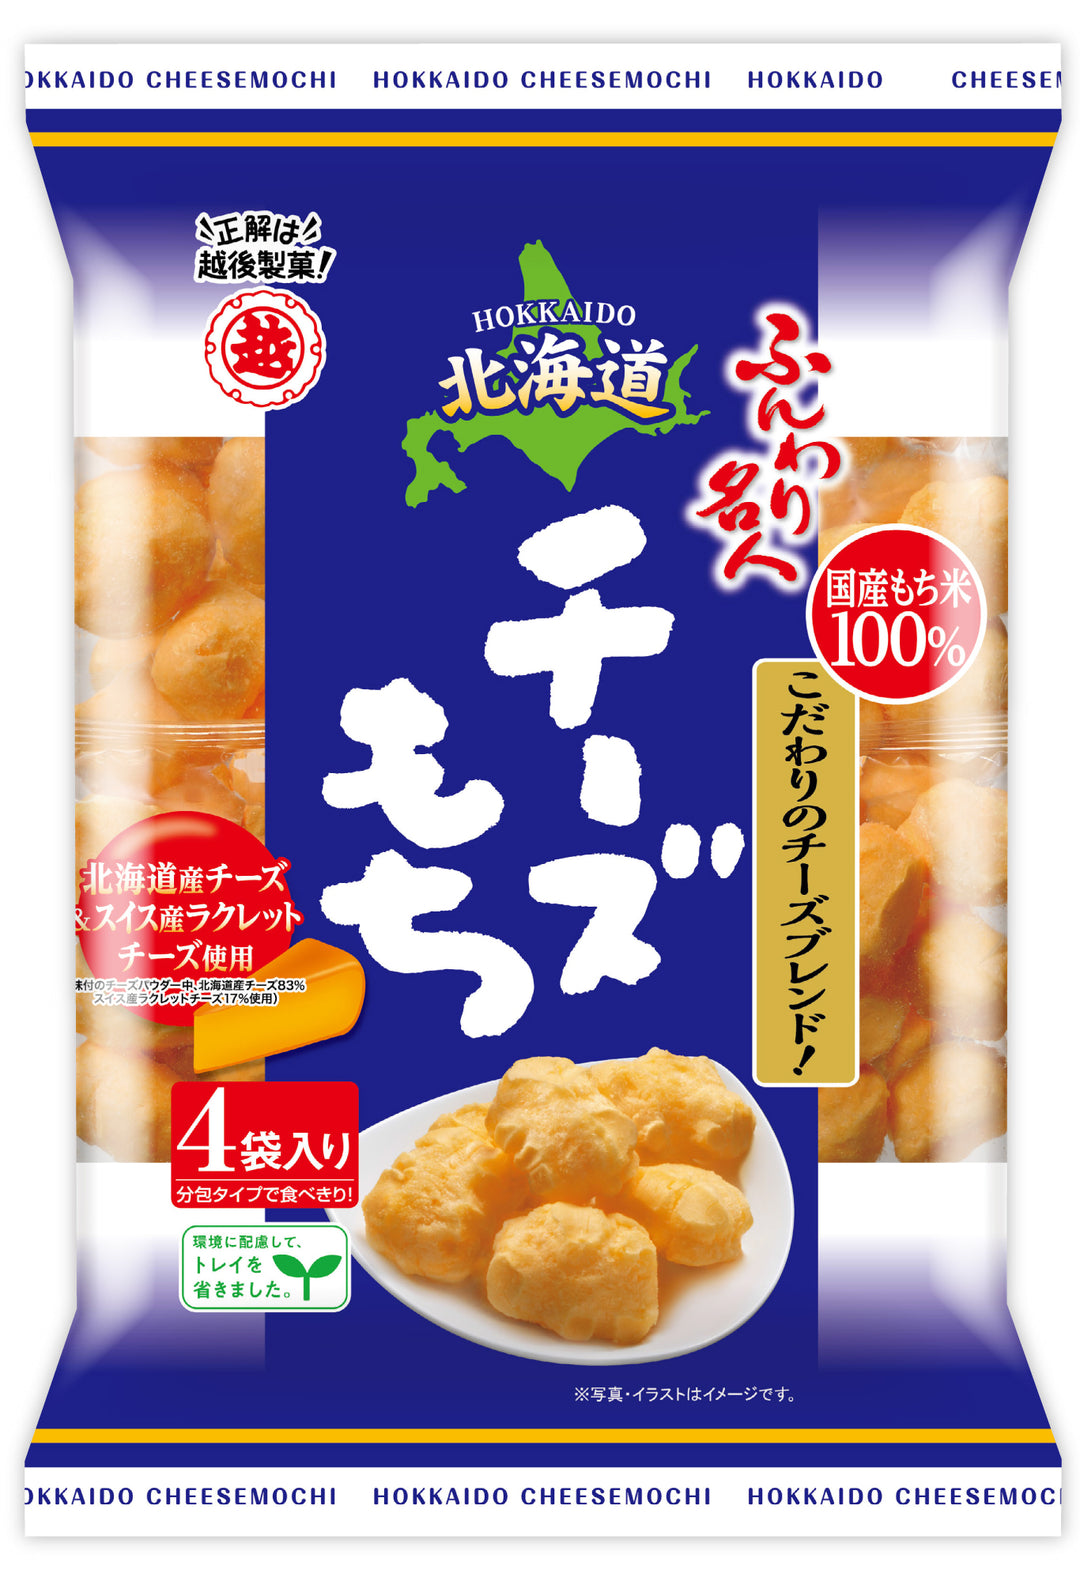 A bag of addicting Funwari Meijin Mochi Puffs: Cheese with japanese text by Echigo Seika.